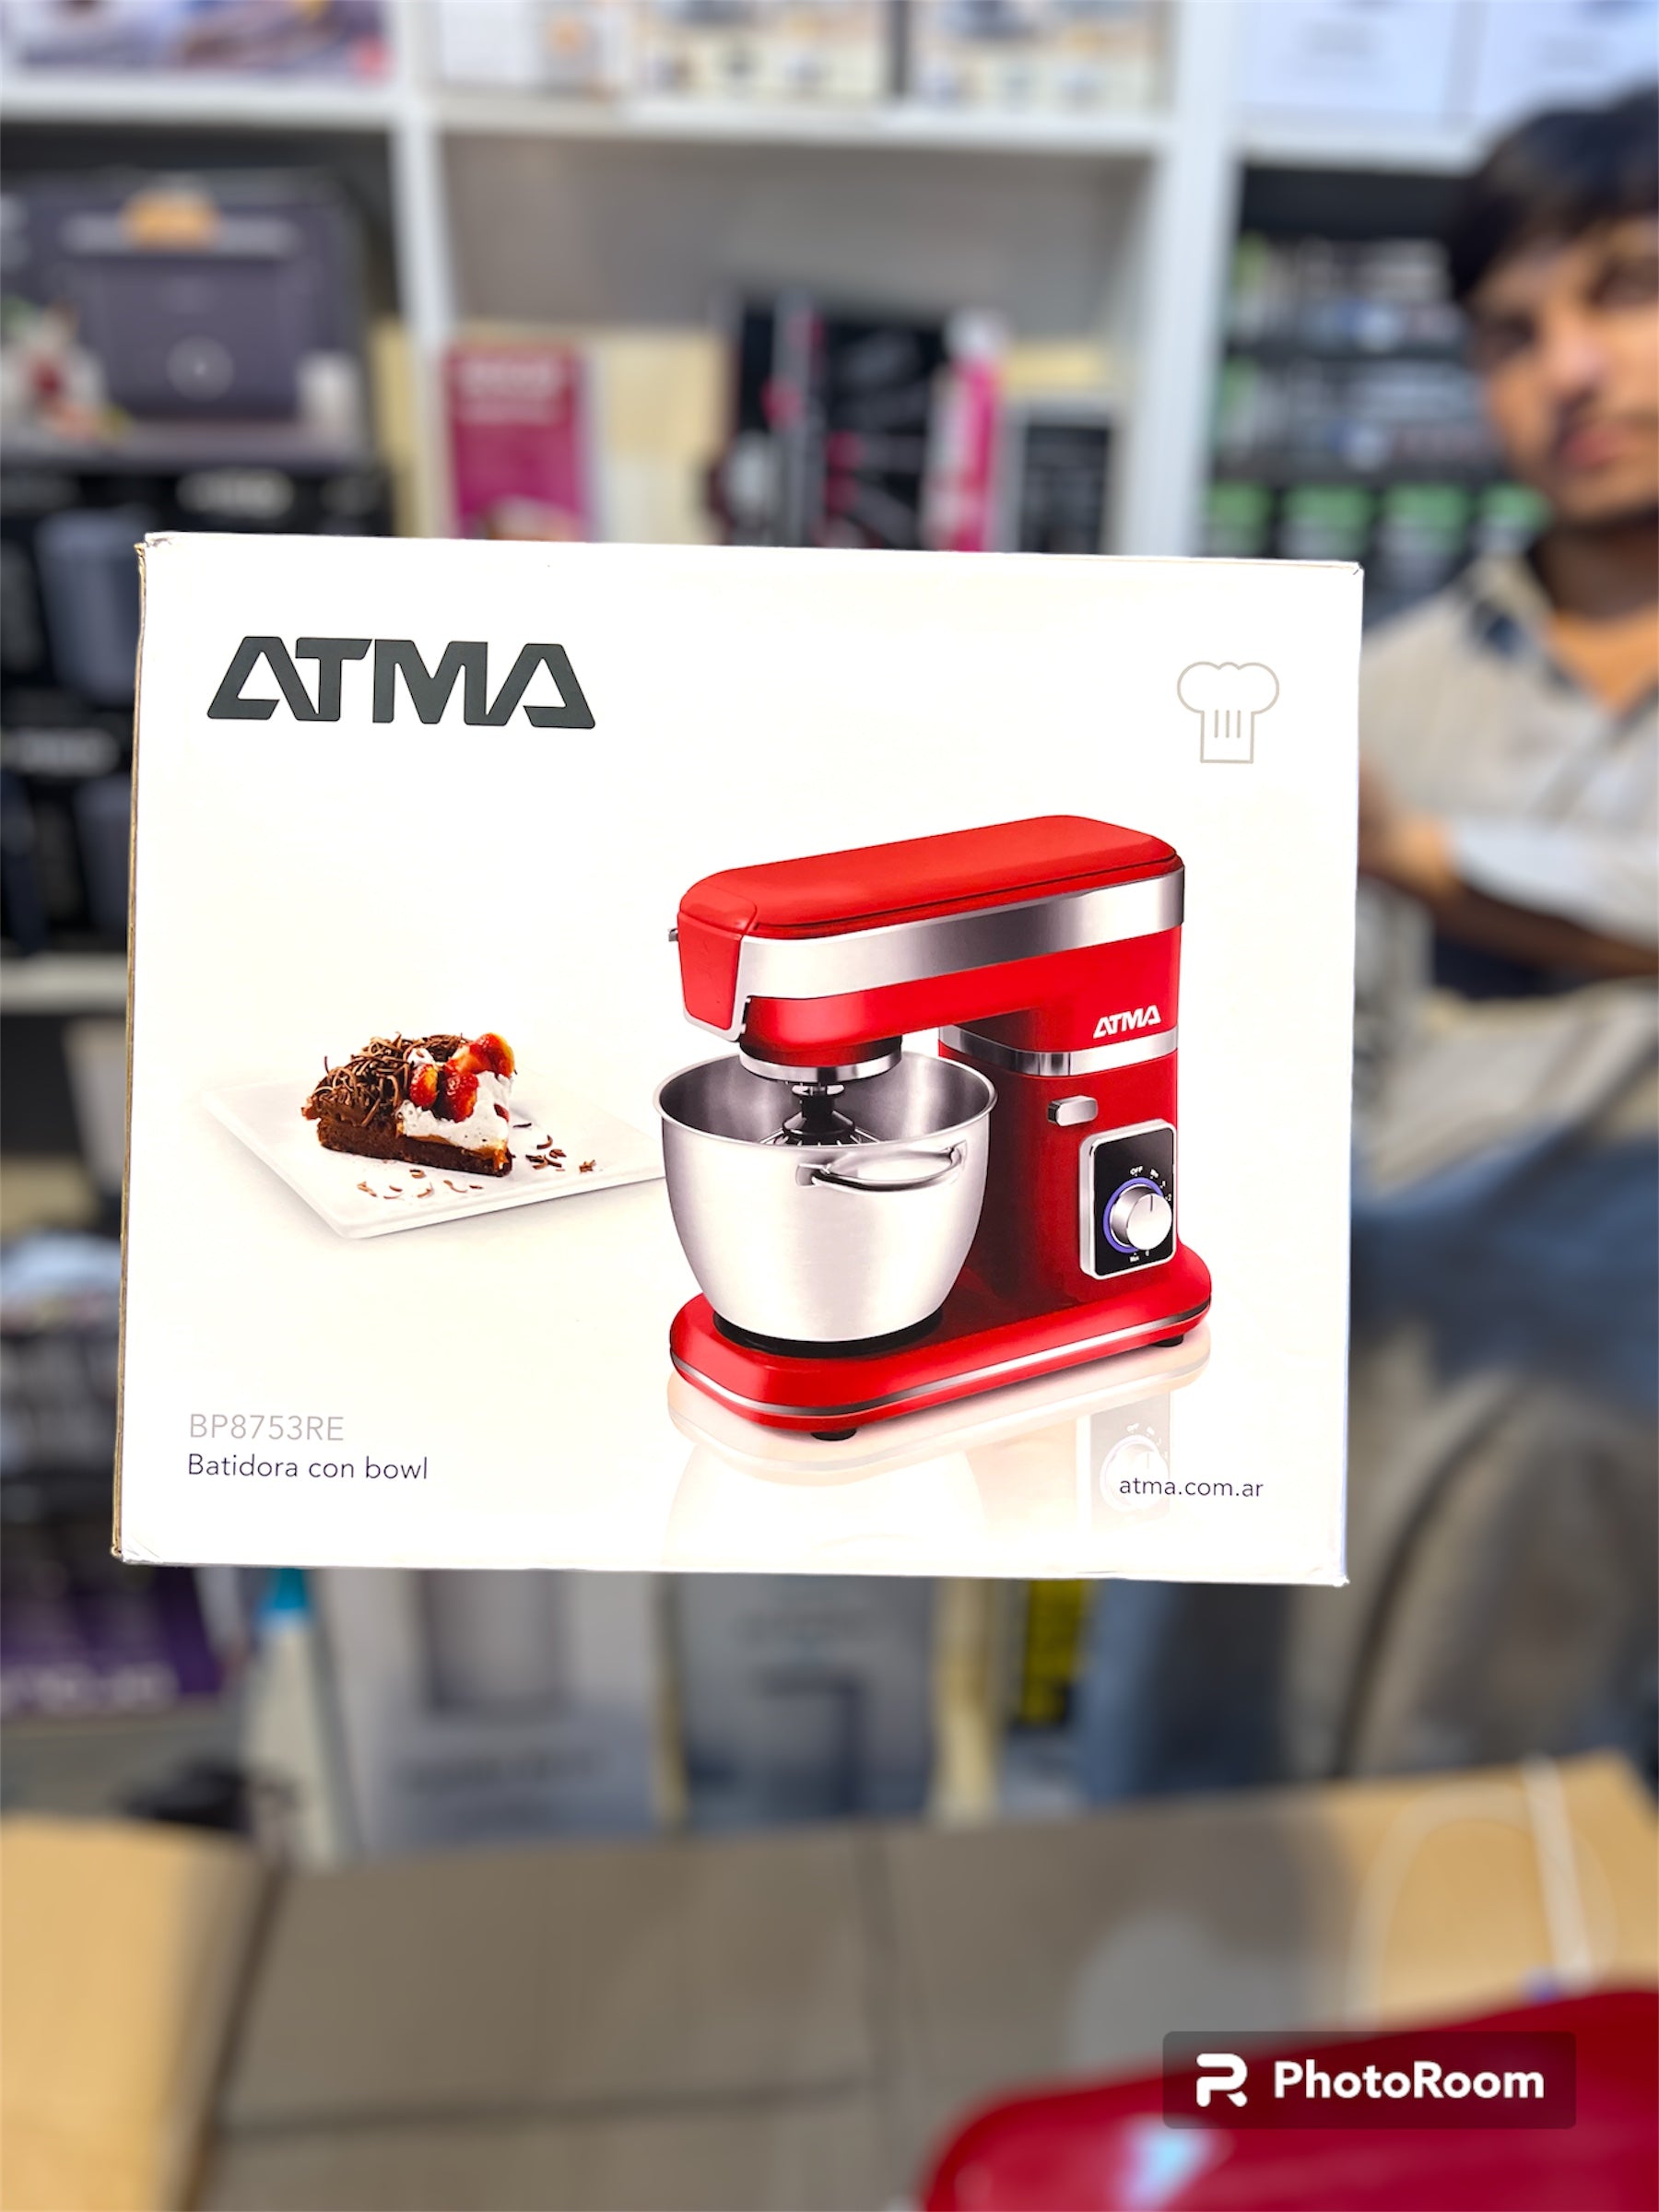 ATMA Argentina Brand Stand Mixer 4.5Litre